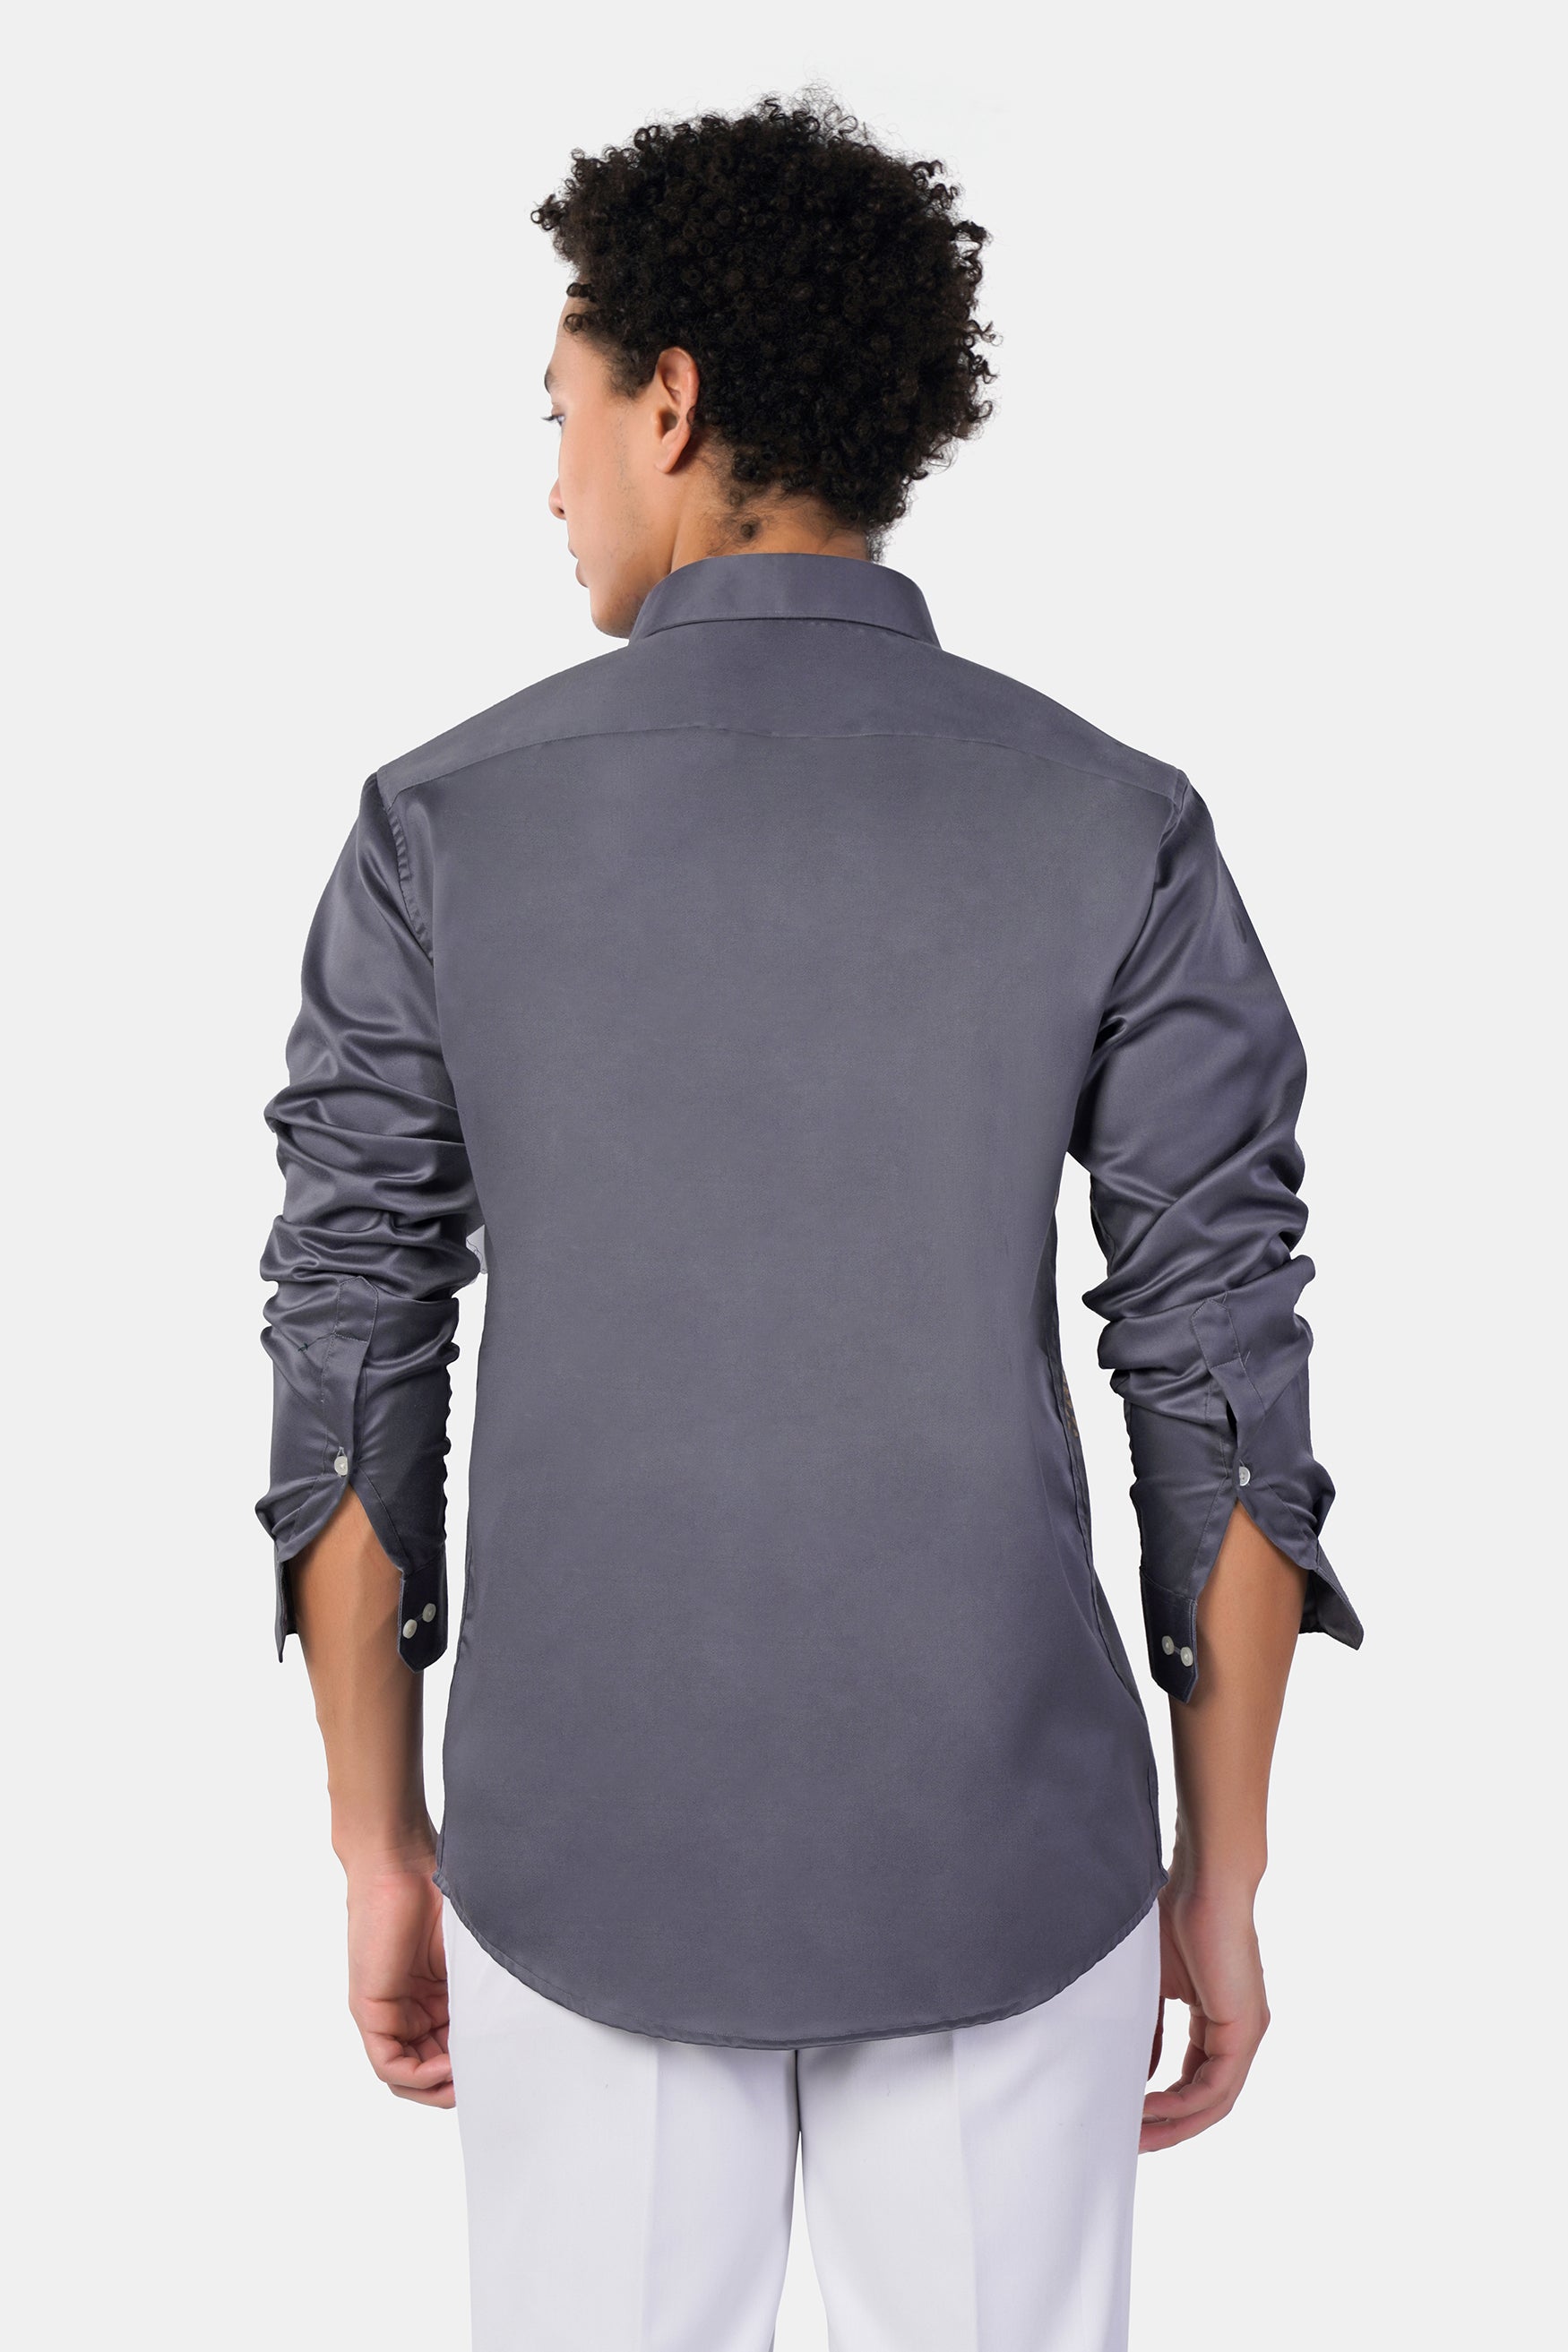 Mist Gray Hand Painted Subtle Sheen Super Soft Premium Cotton Designer Shirt